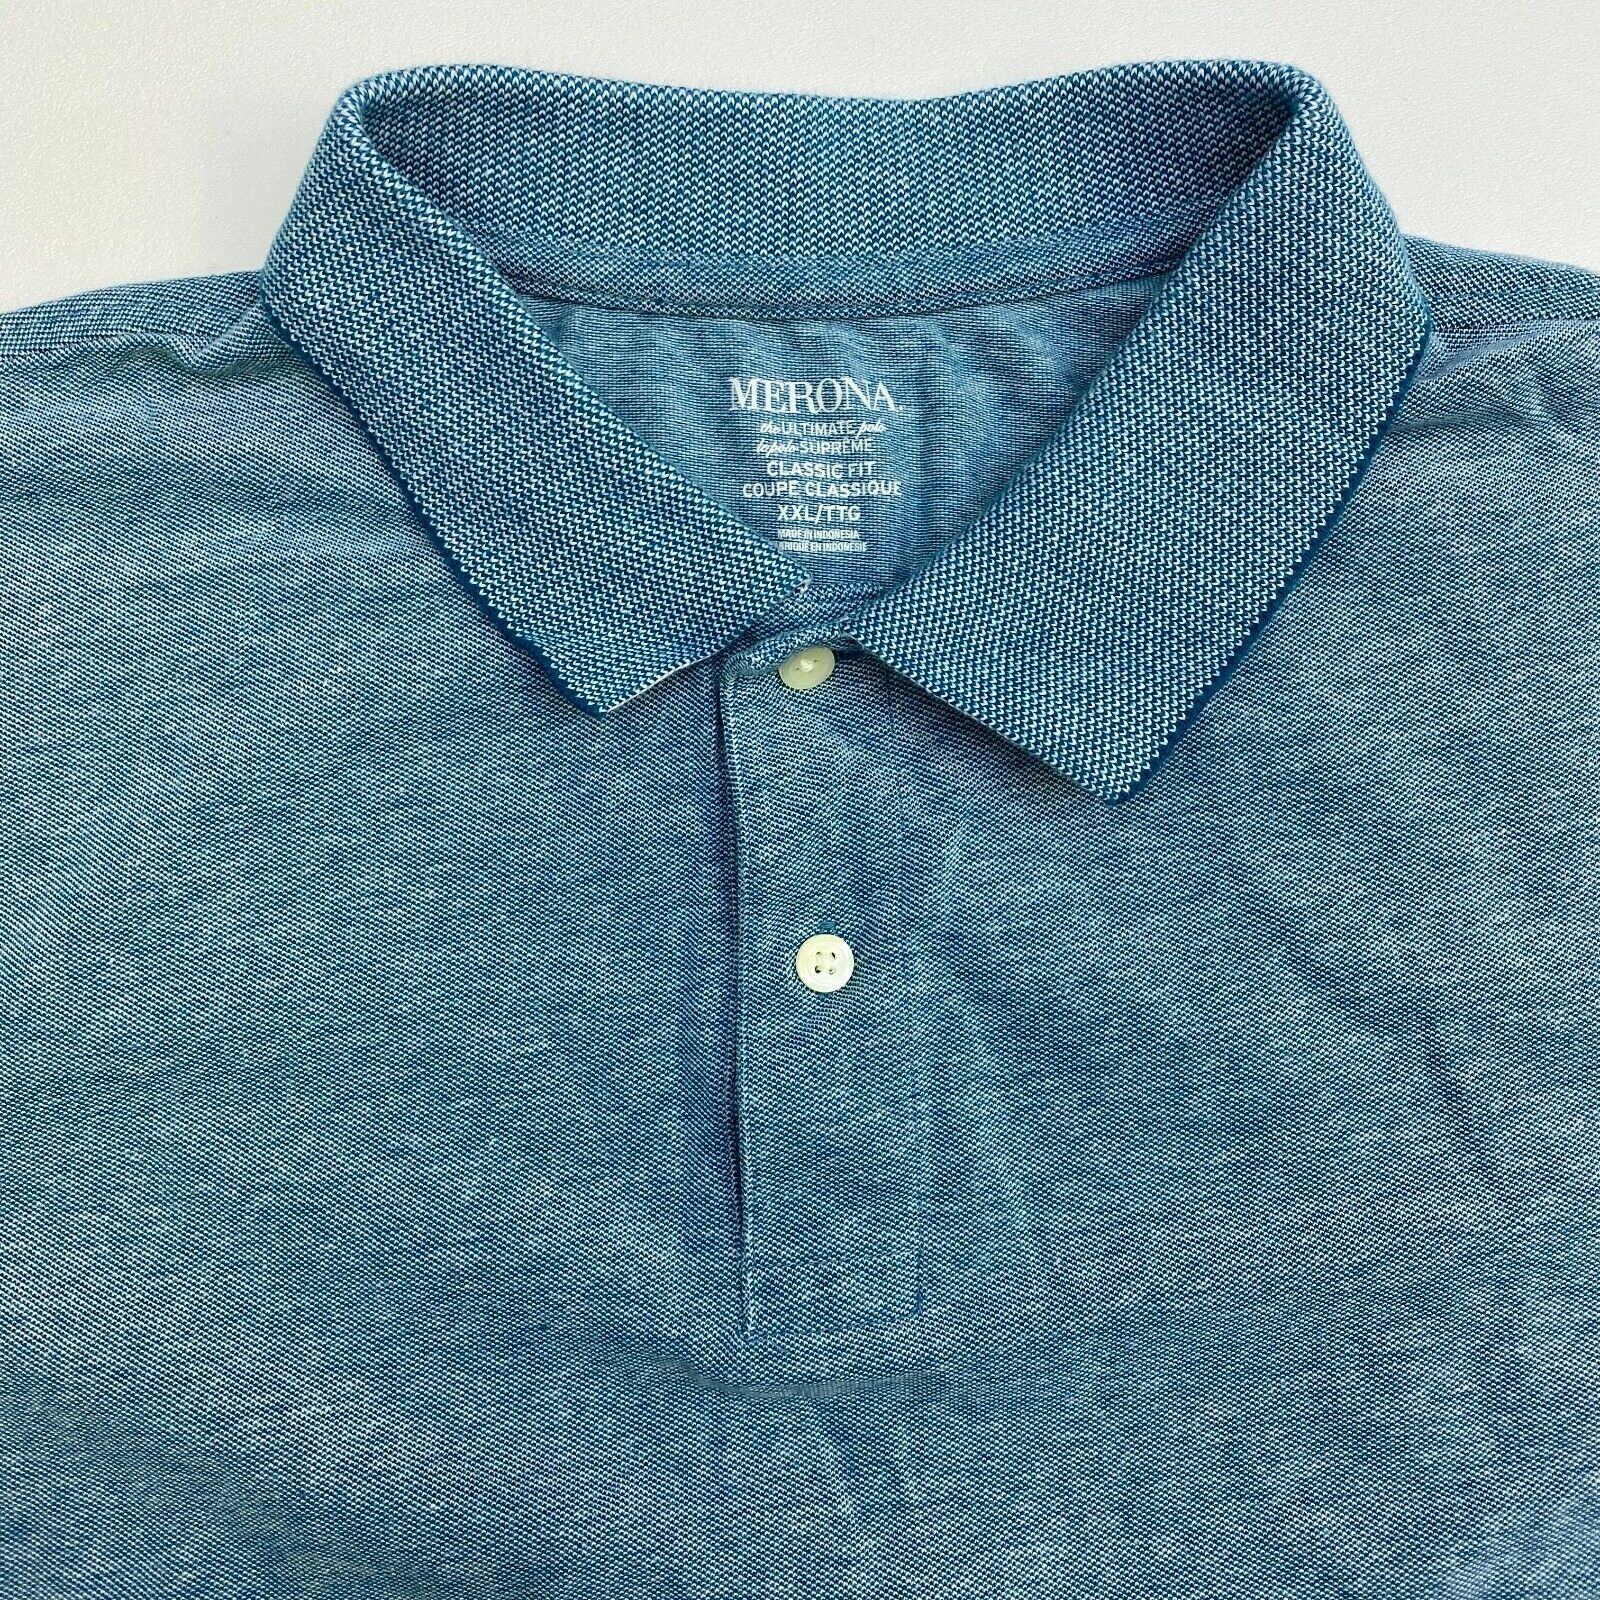 Merona Polo Shirt Mens XXL Blue Short Sleeve Casual - Polos